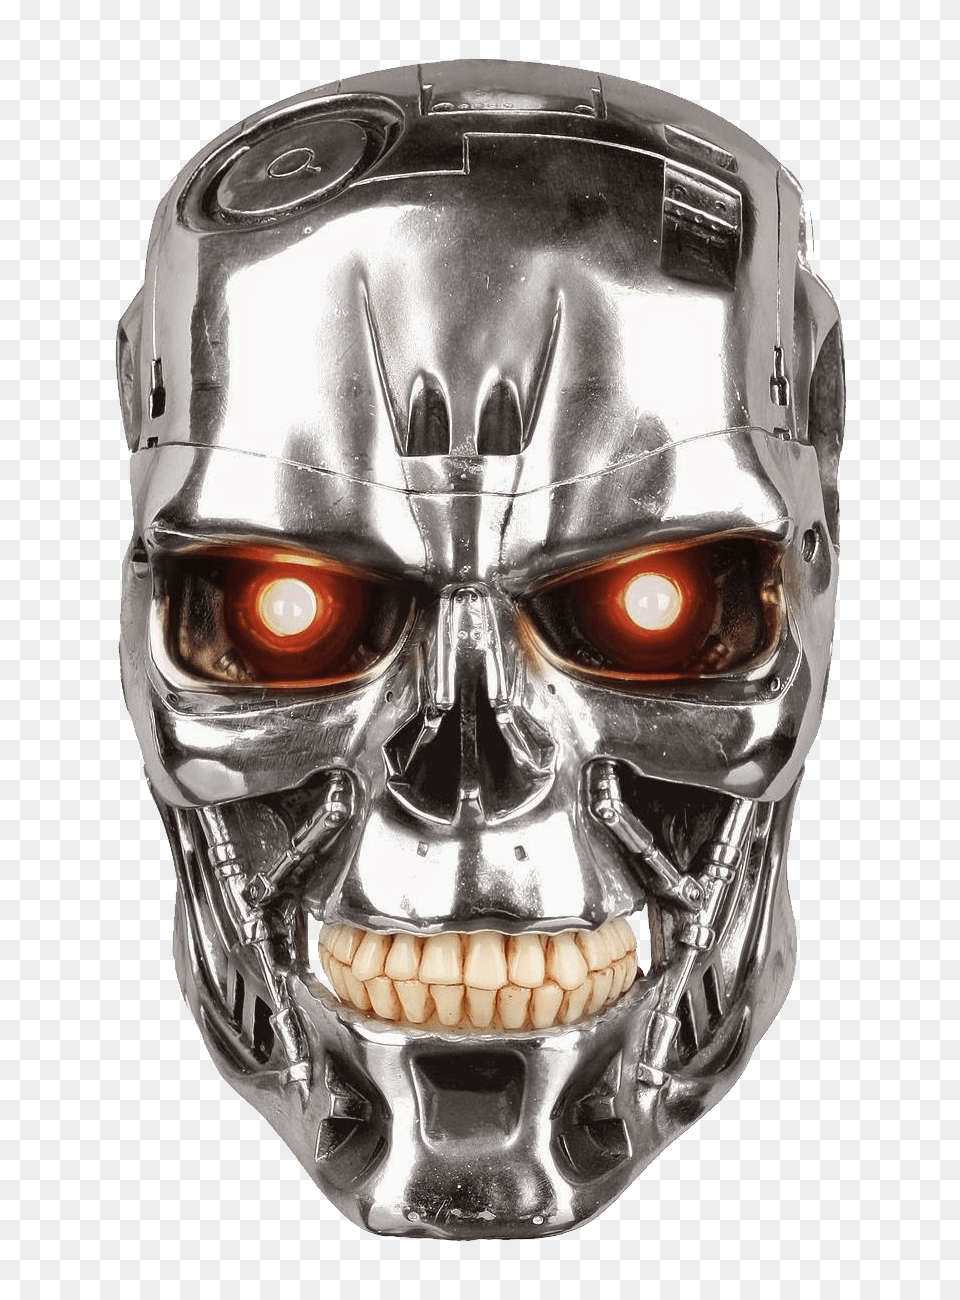 Terminator, Mask, Helmet Png